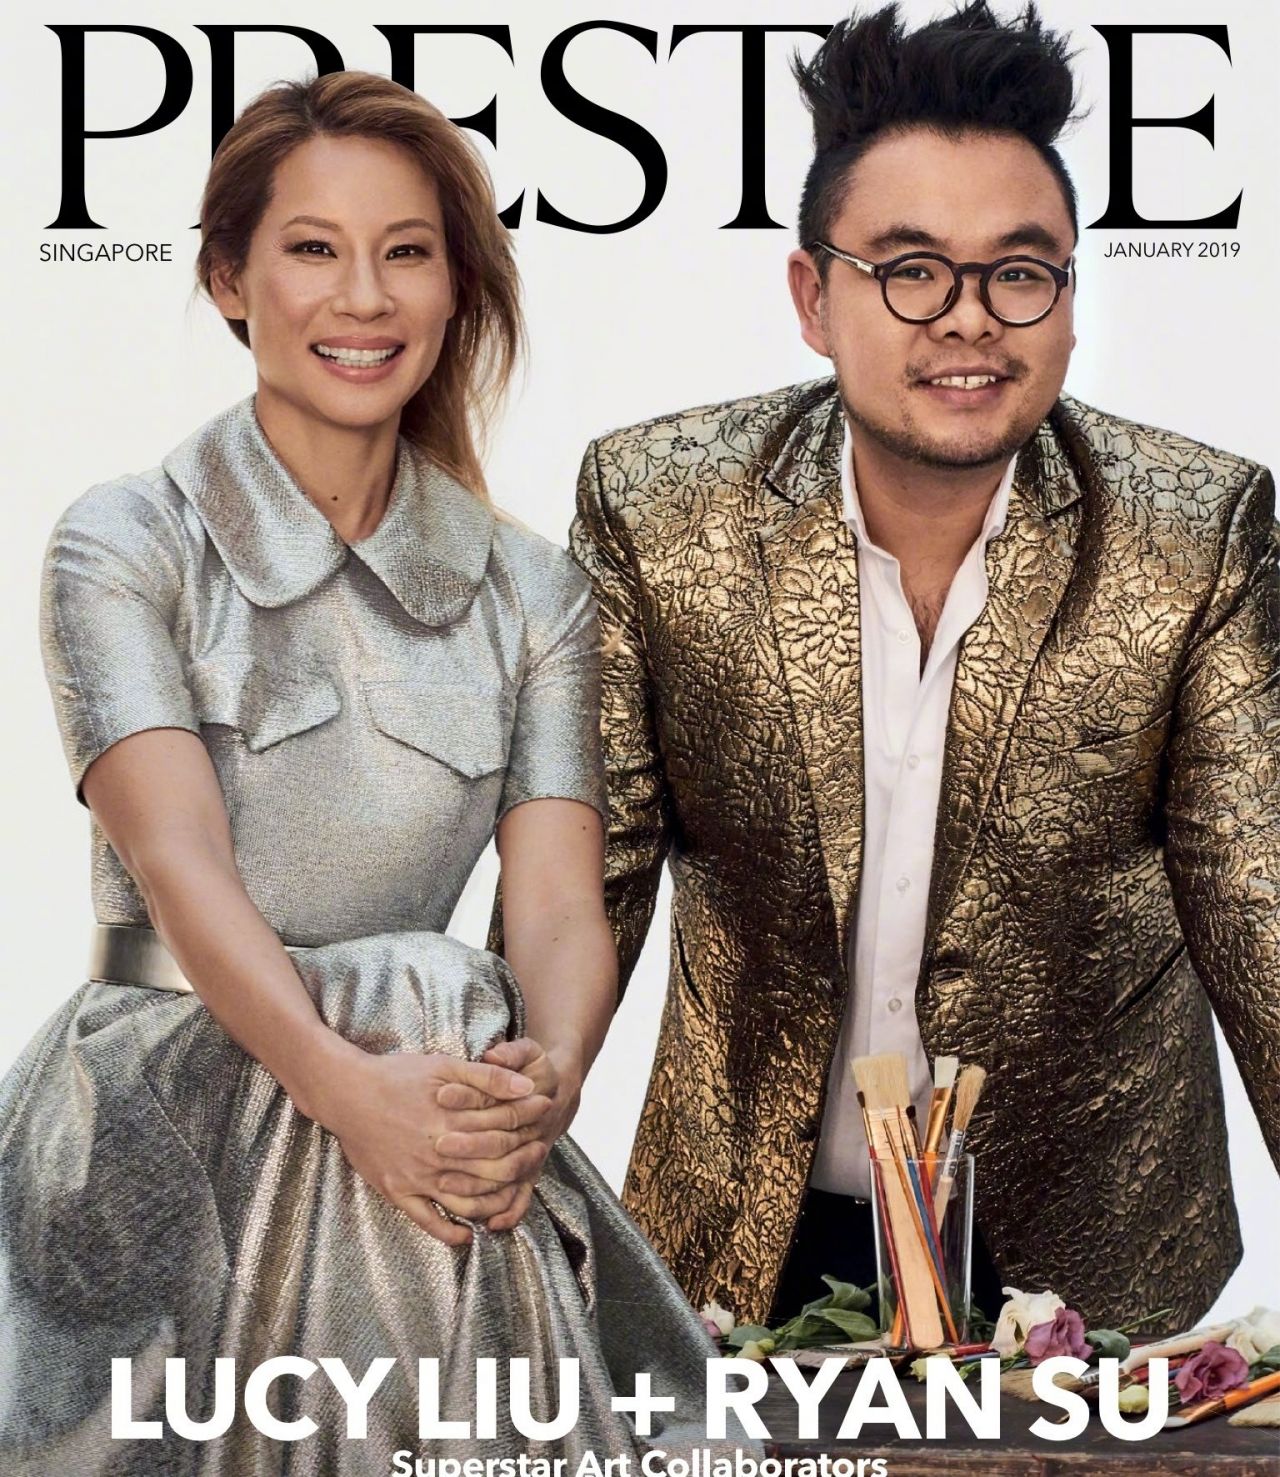 https://celebmafia.com/wp-content/uploads/2019/01/lucy-liu-and-ryan-su-prestige-singapore-january-2019-3.jpg